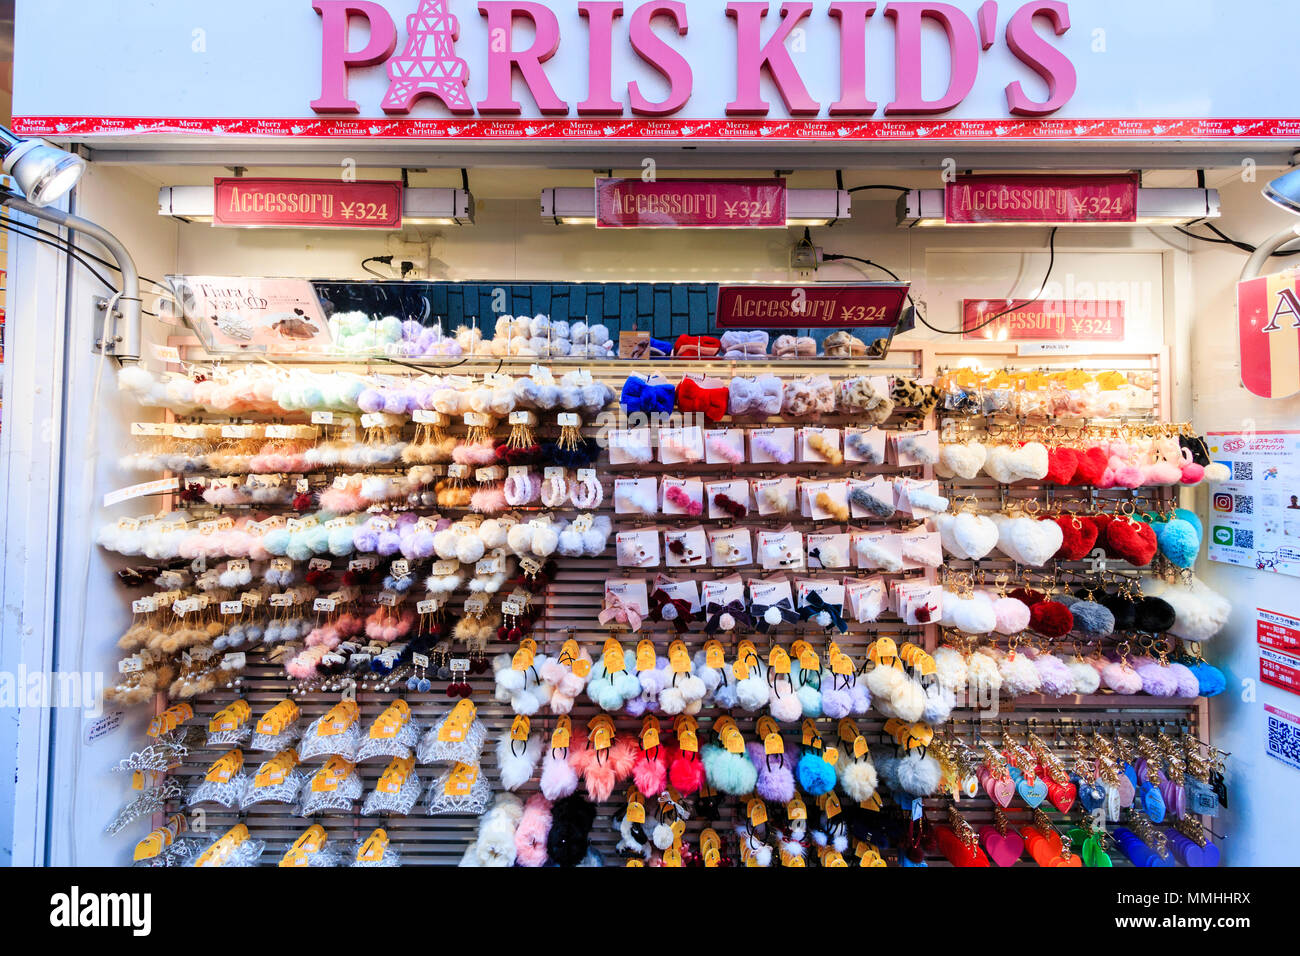 Tokyo, Harajuku, Takeshita street. Paris Kids, famous fashion store, shop front, display of rows of Women's fashion accessories Stock Photo -